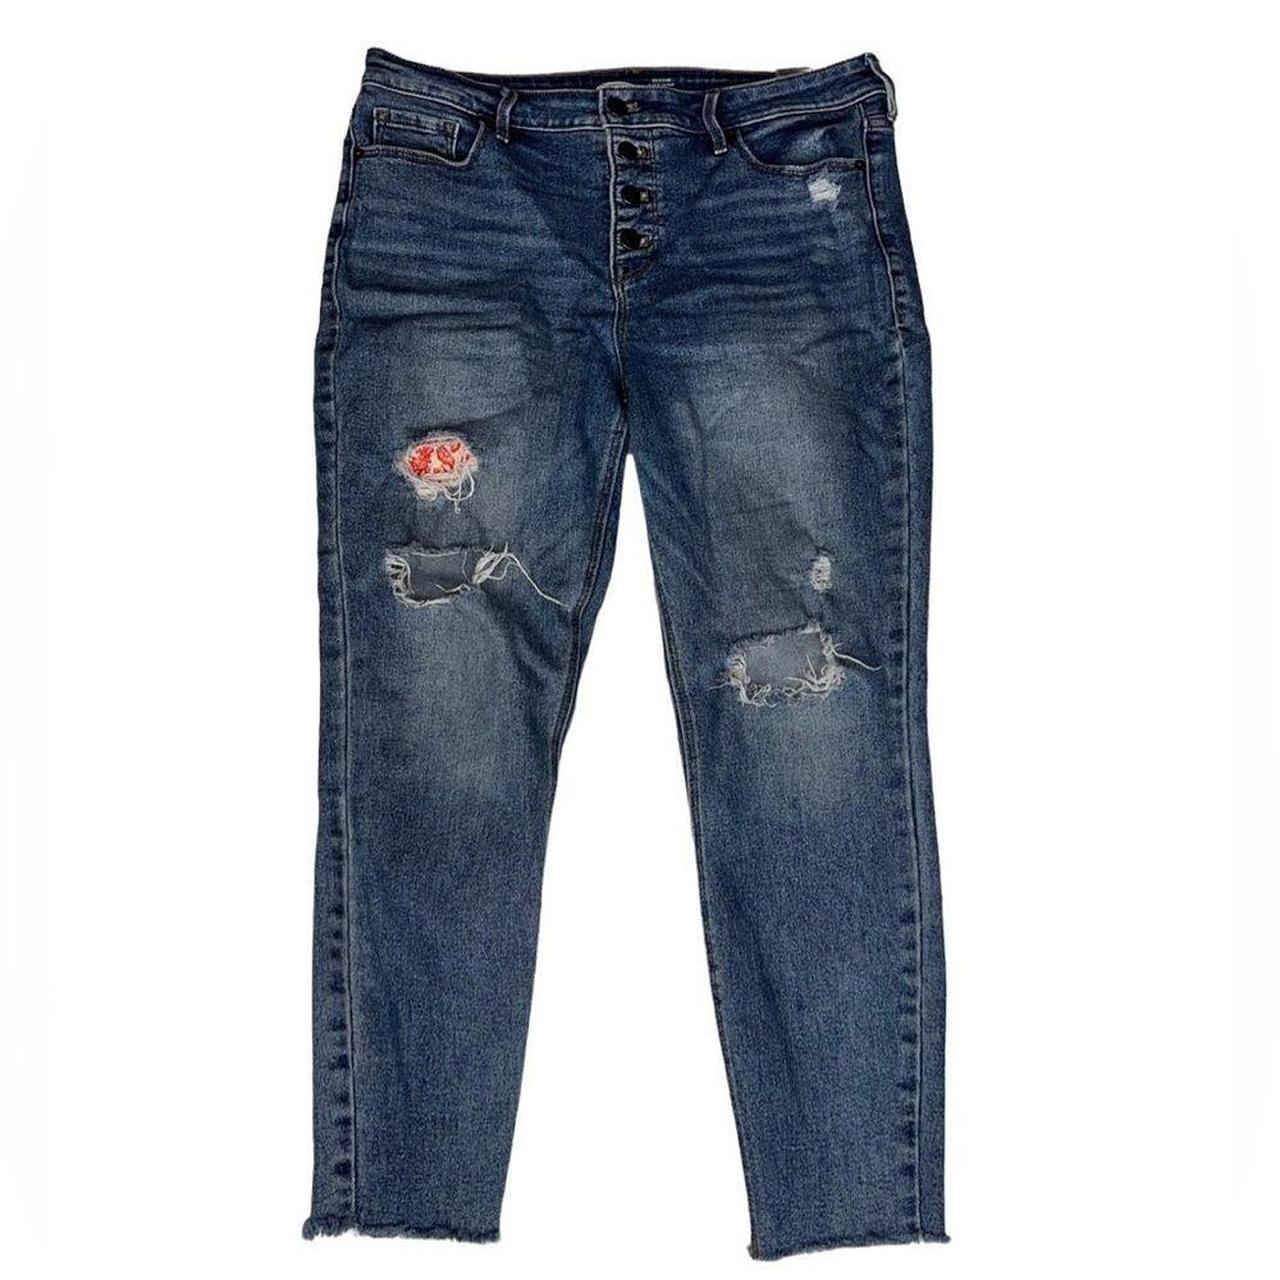 High rise rockstar super skinny jeans from Old Navy. - Depop